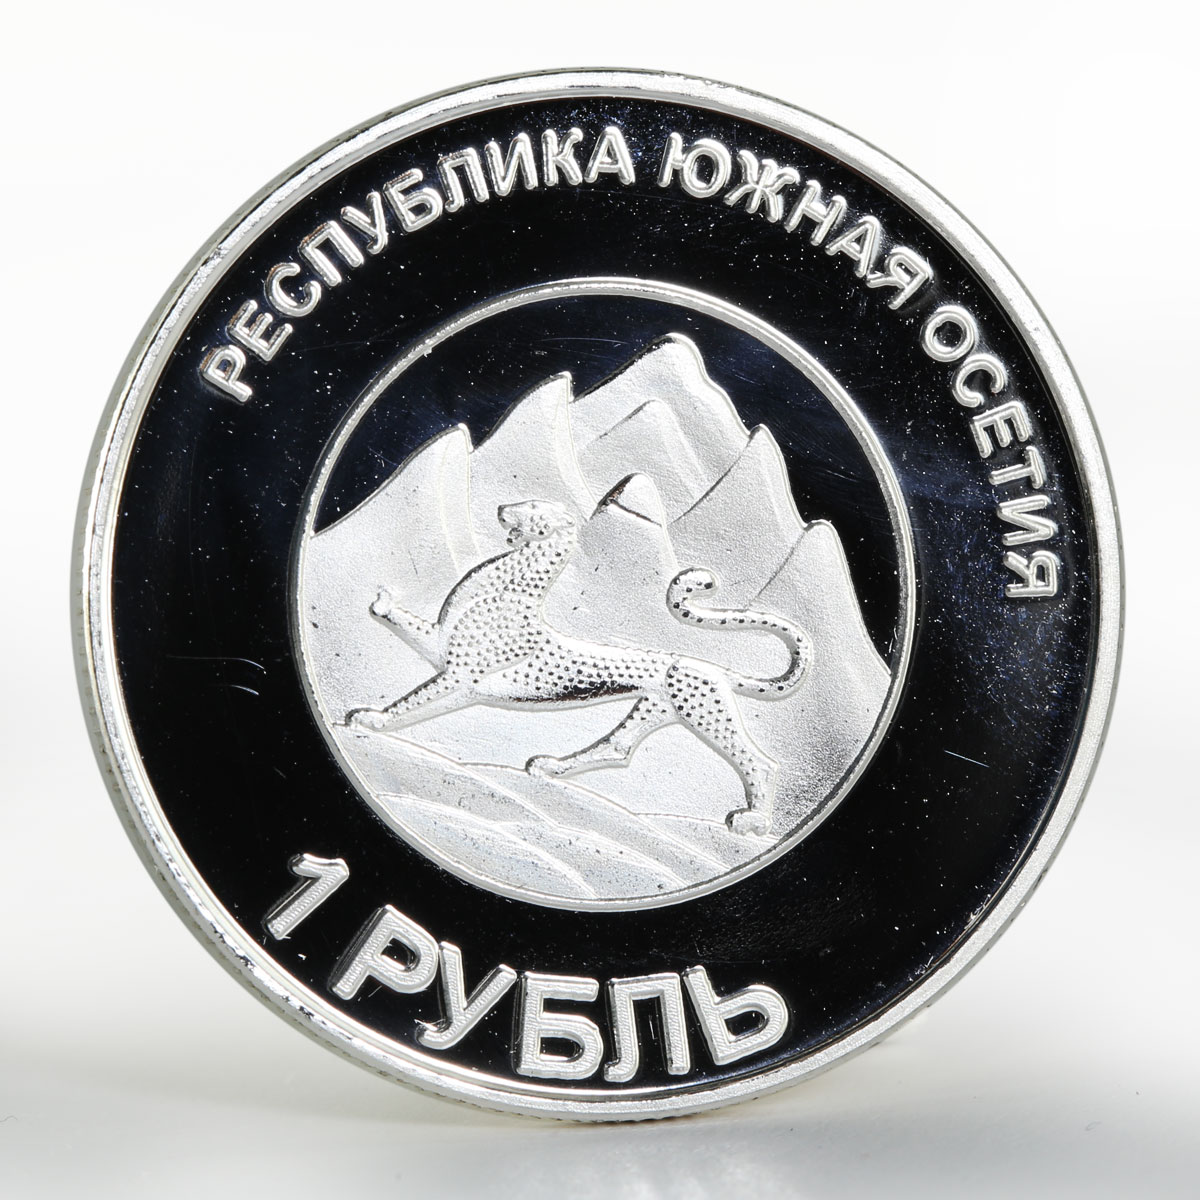 South Ossetia 1 ruble Dmitry Medvedev copper nickel coin 2013